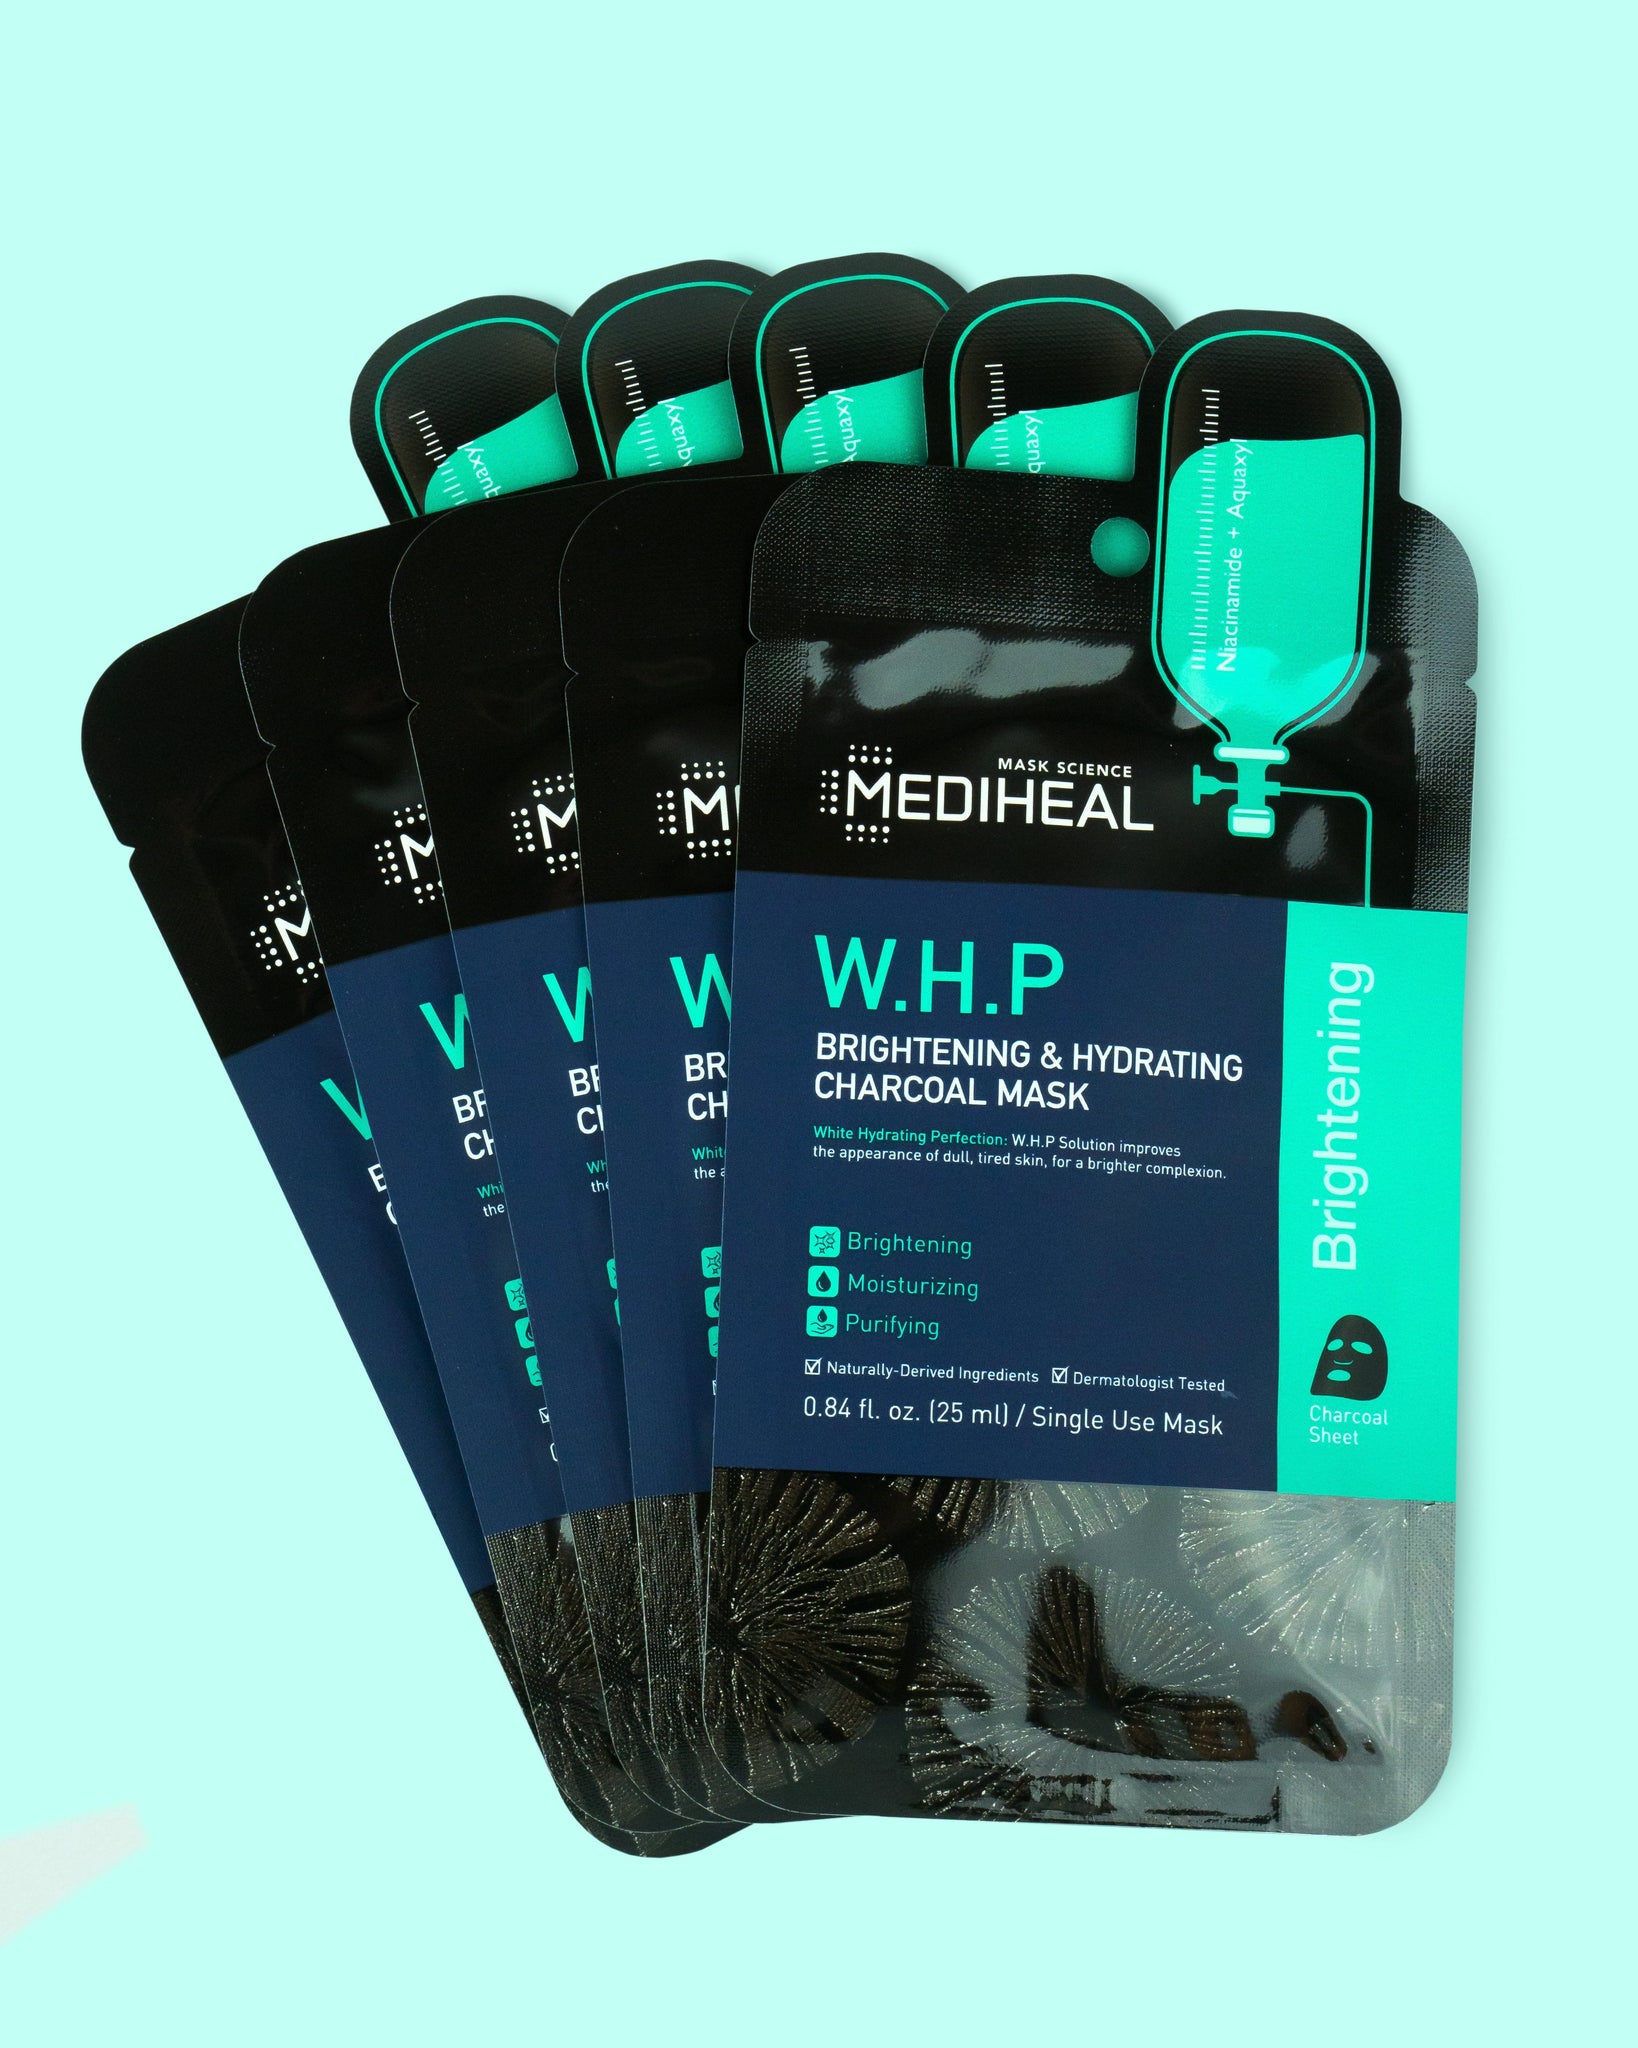 W.H.P Brightening & Hydrating Charcoal Sheet Mask Sheet Mask MEDIHEAL 